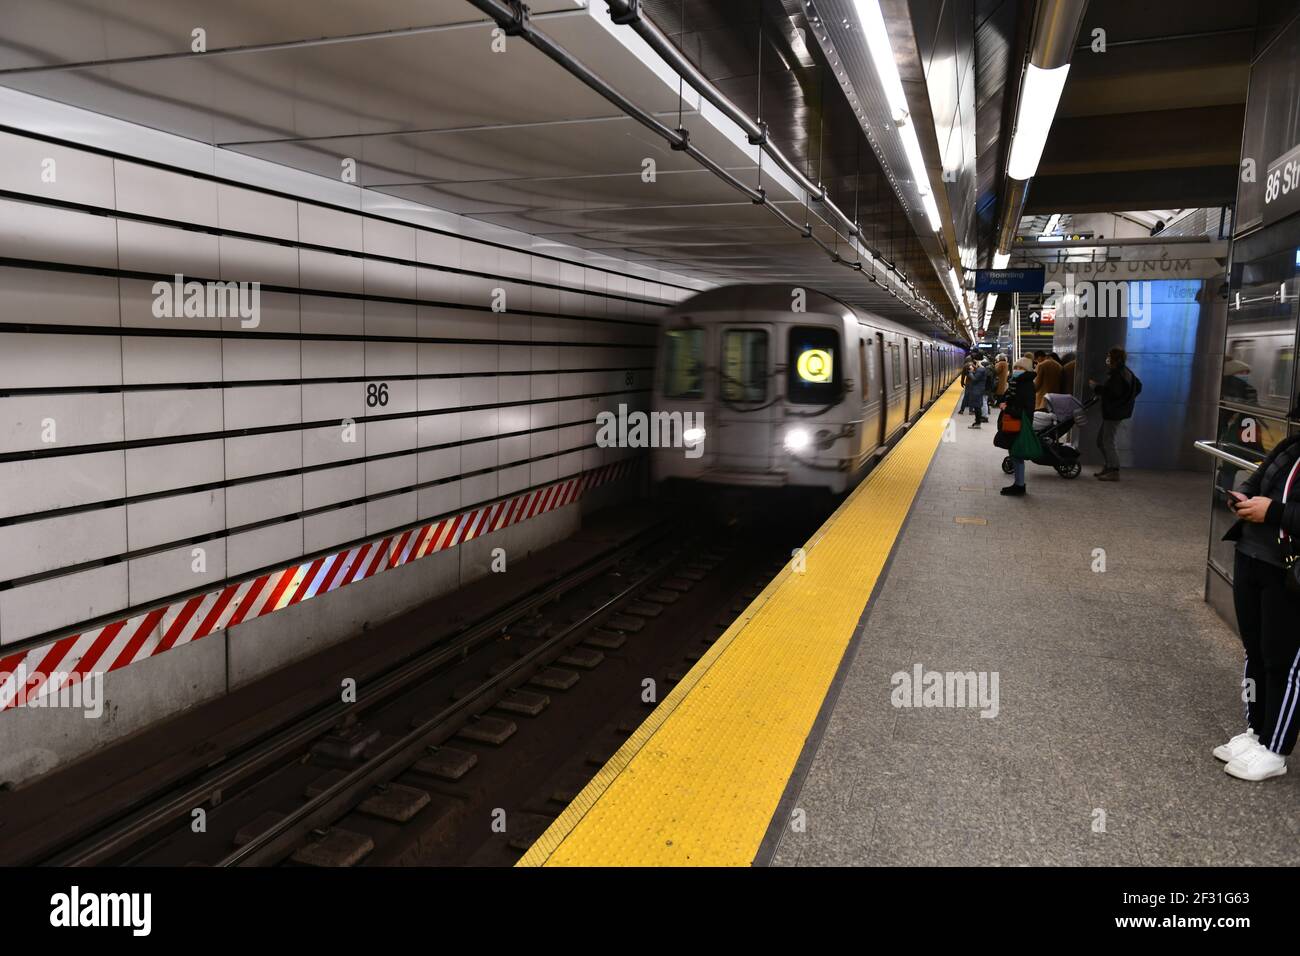 New York City - 21. Feb 2021: Bahnsteig der 2nd Avenue U-Bahn Linie in New York City an der 86th Street U-Bahn Station in Manhattan, Upper East Side. Stockfoto